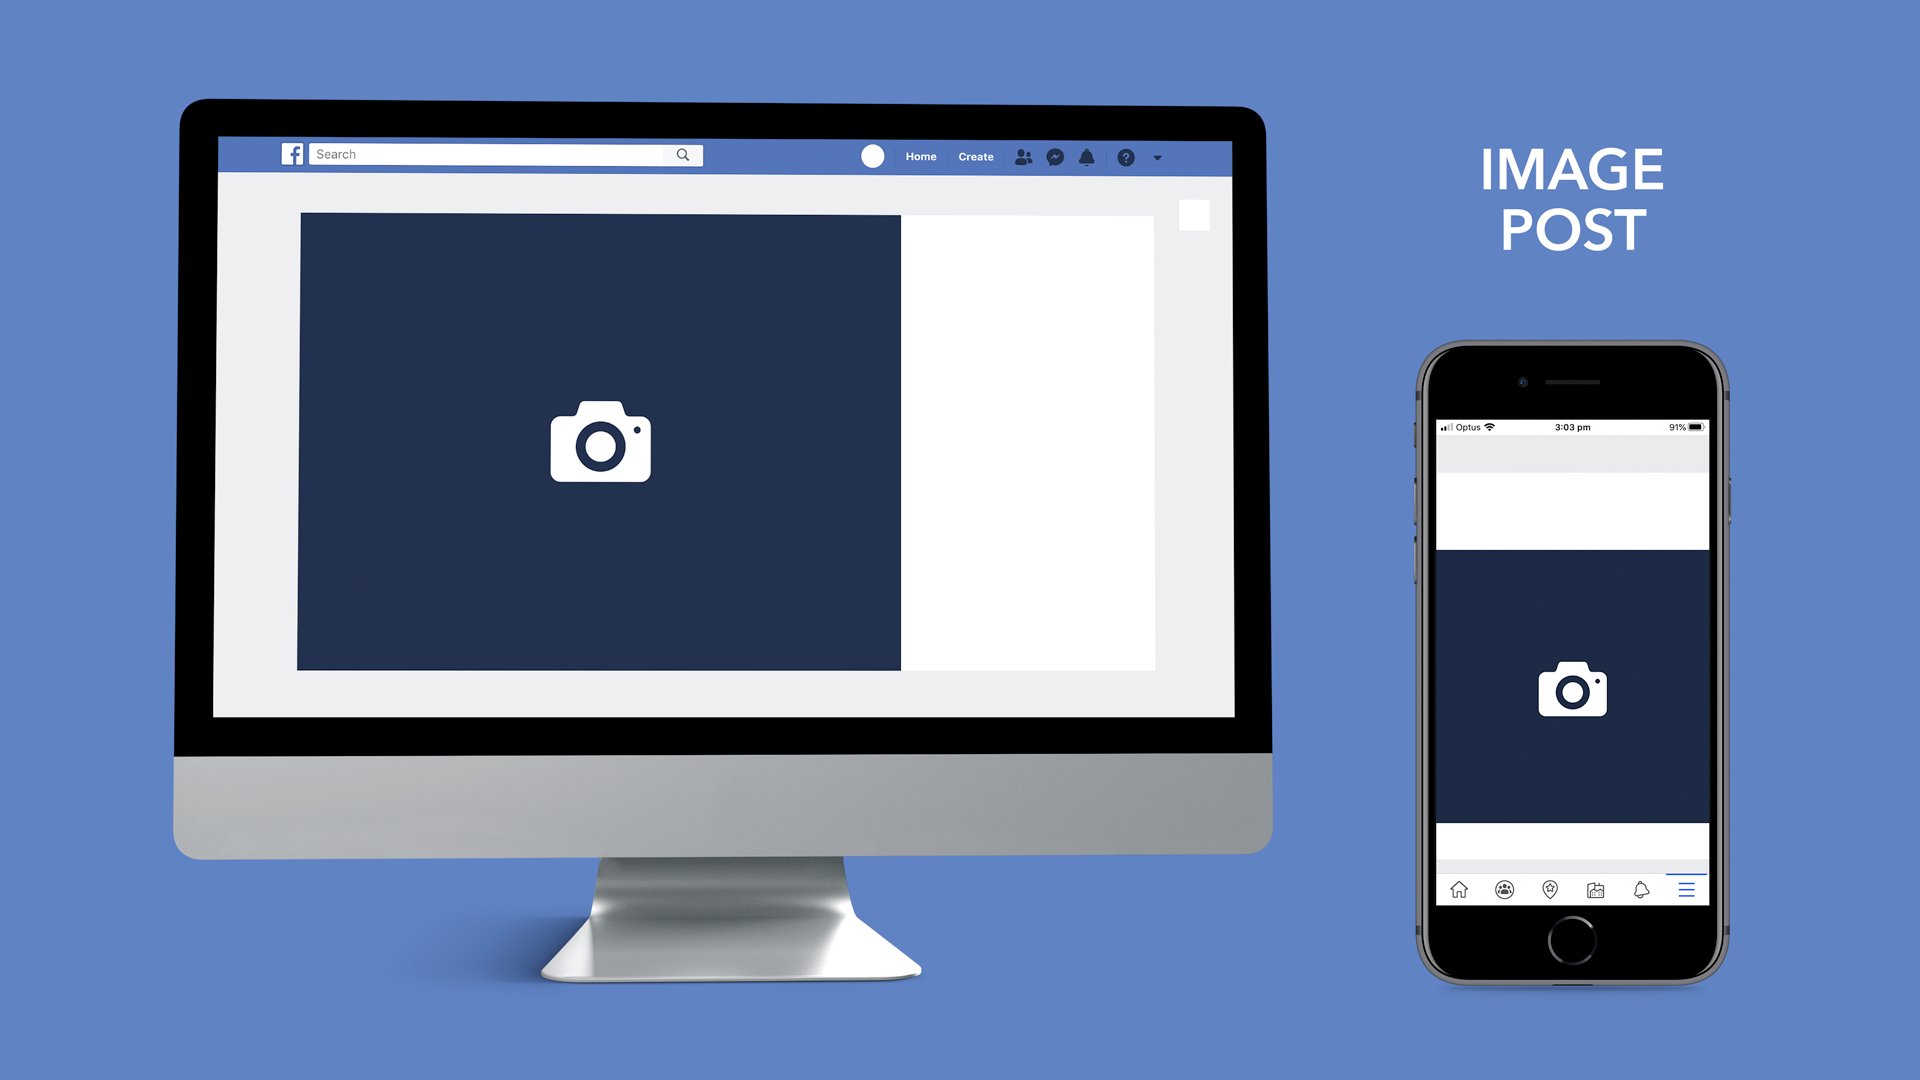 Facebook best practice image dimensions for desktop and mobile